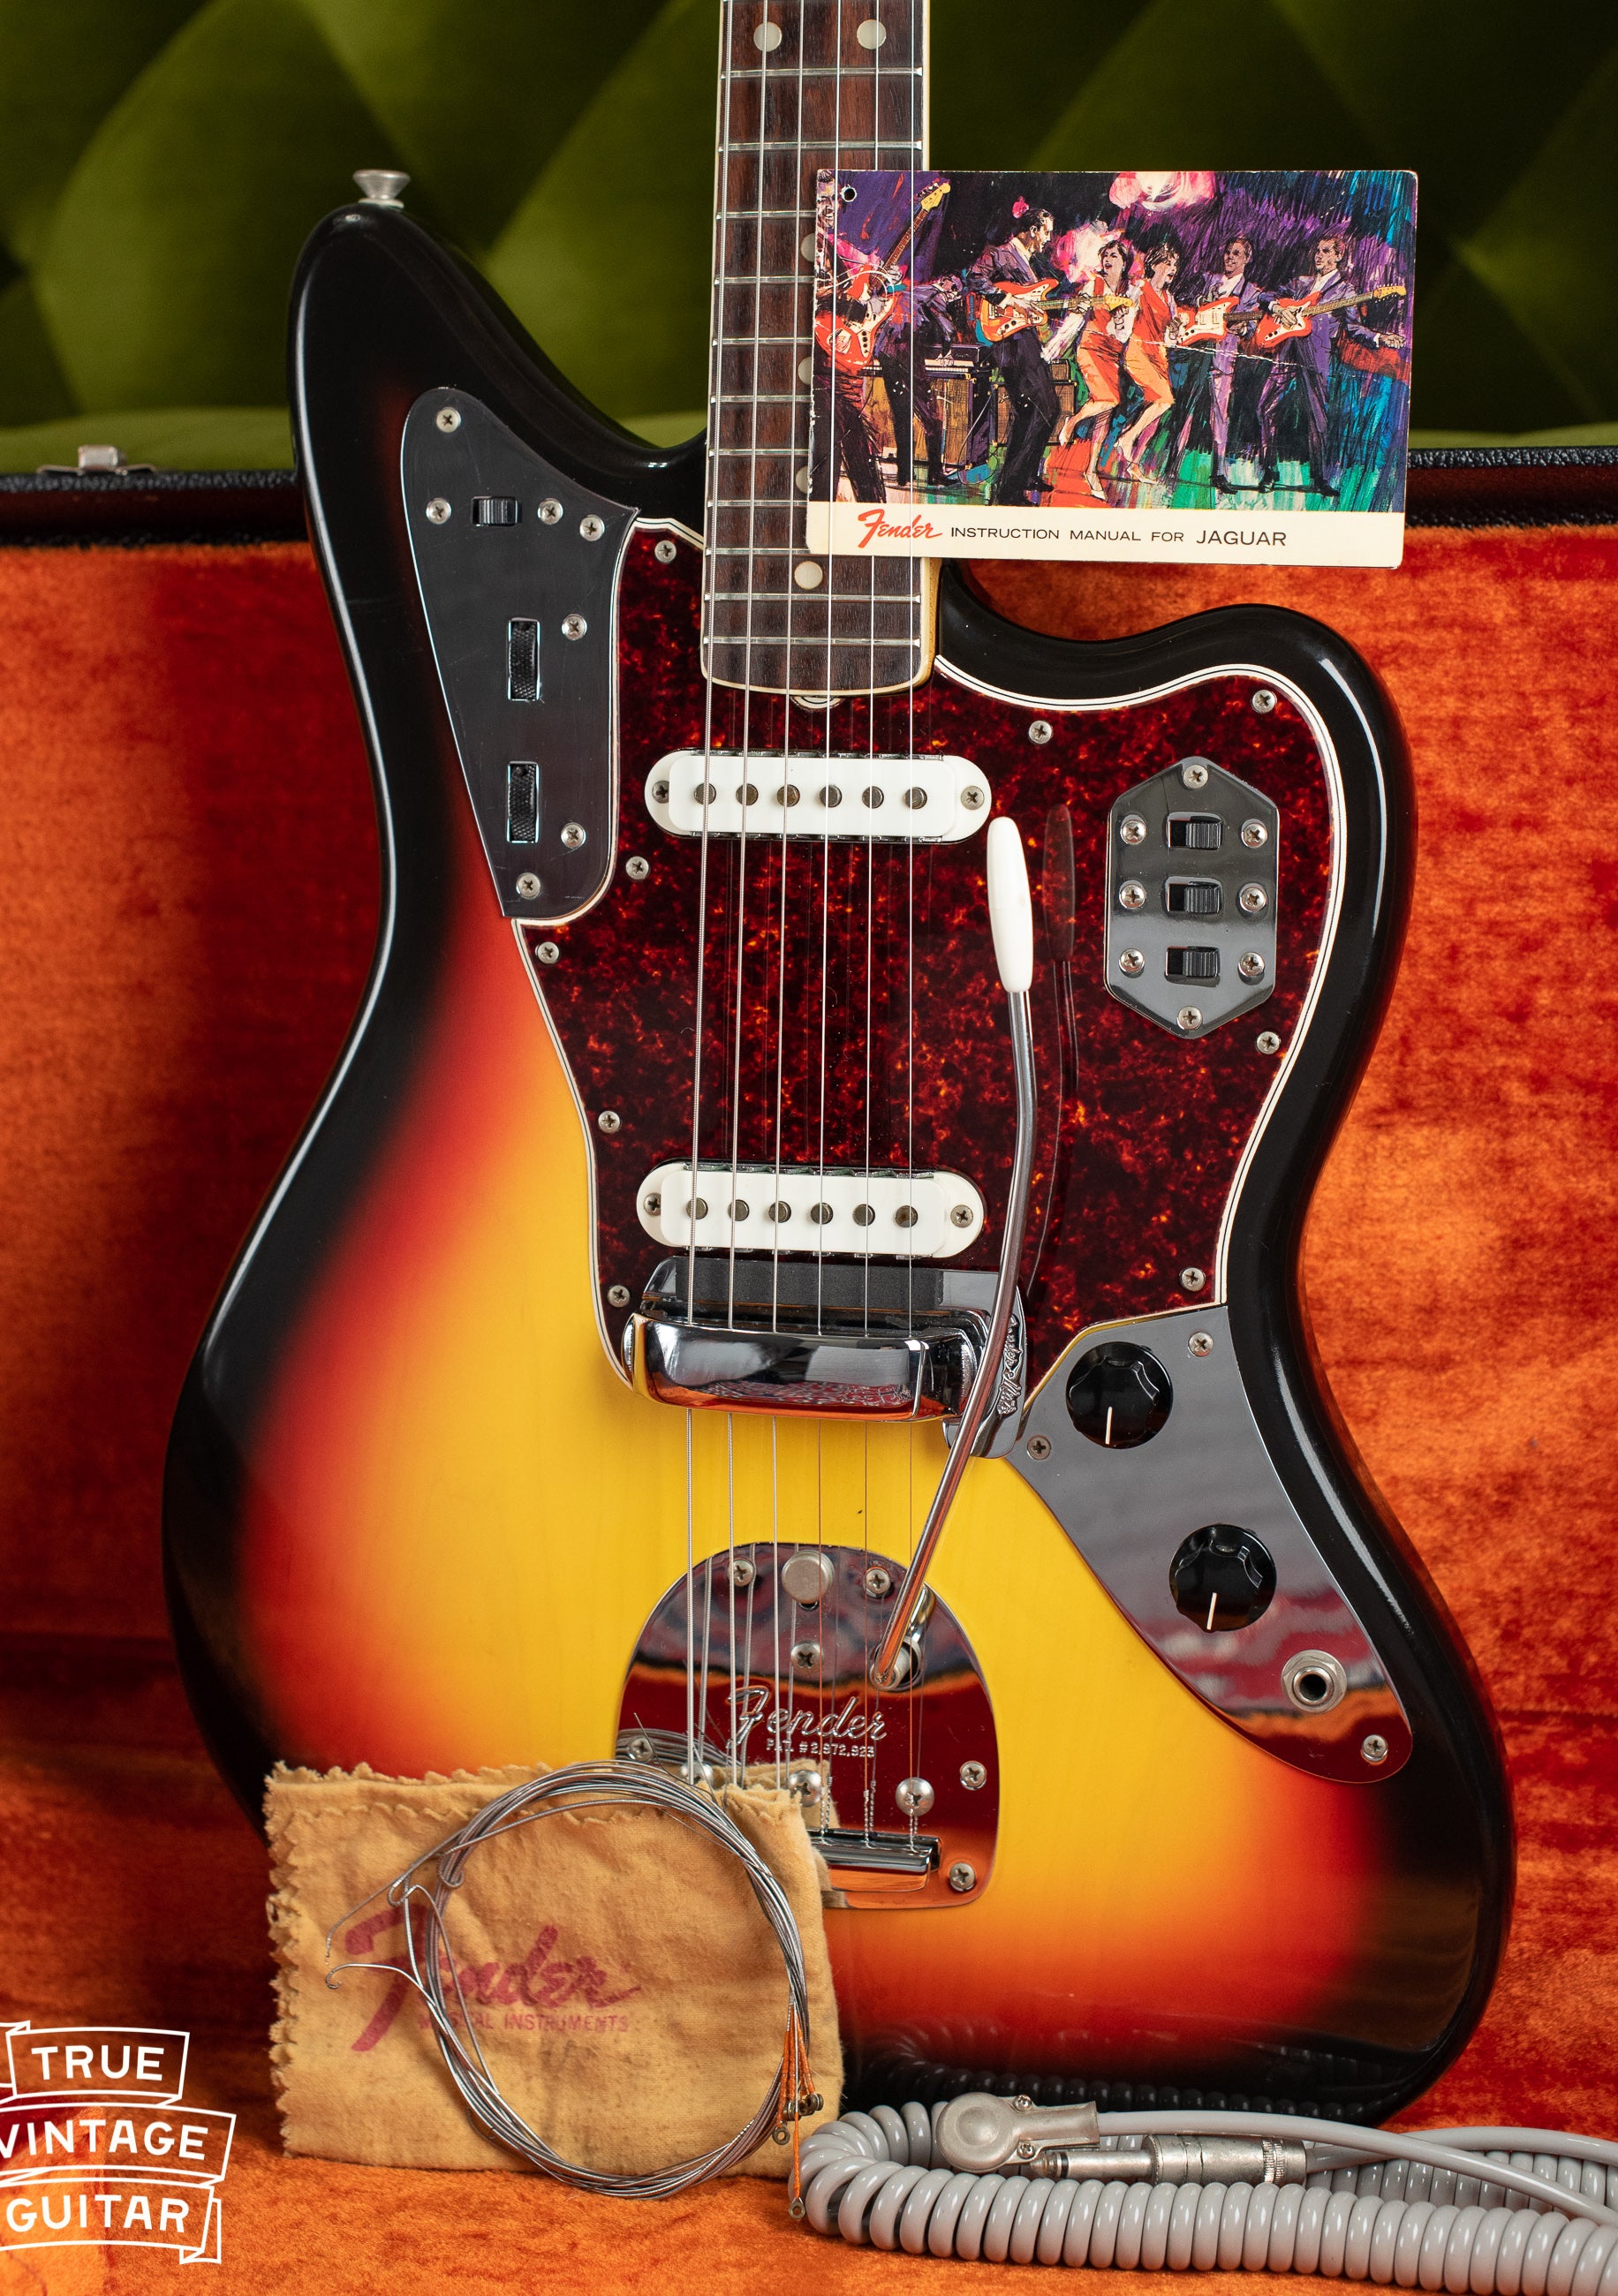 Vintage 1966 Fender Jaguar electric guitar, Sunburst finish, with hang tag and polish cloth